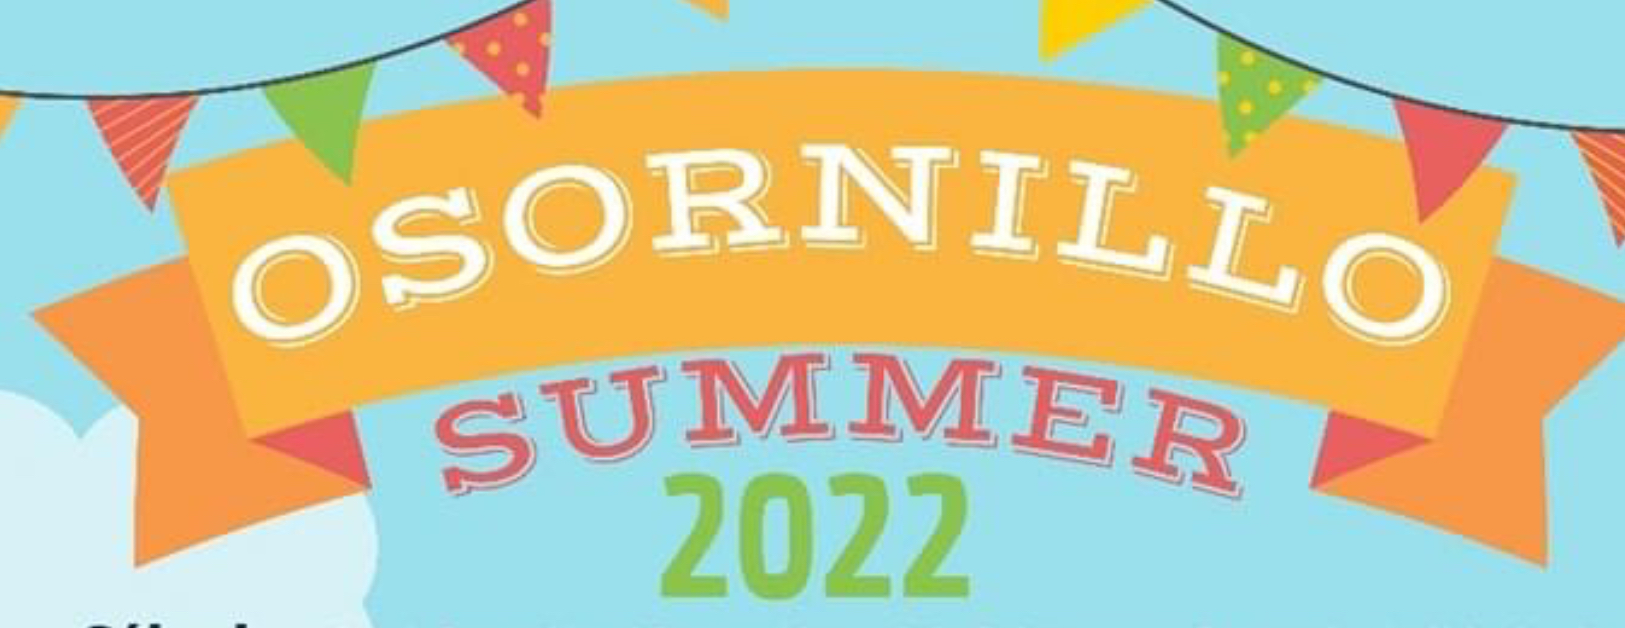 Osornillo summer  2022